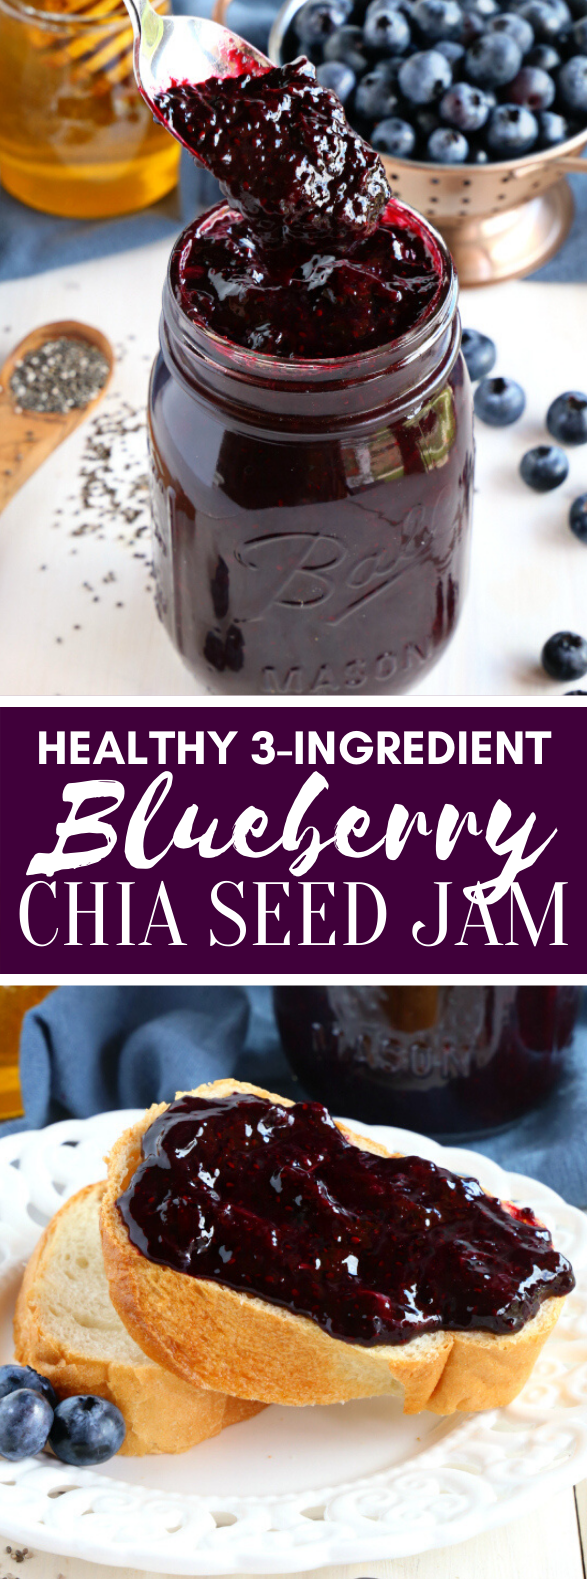 3-INGREDIENT BLUEBERRY CHIA SEED JAM #healthy #wholefood